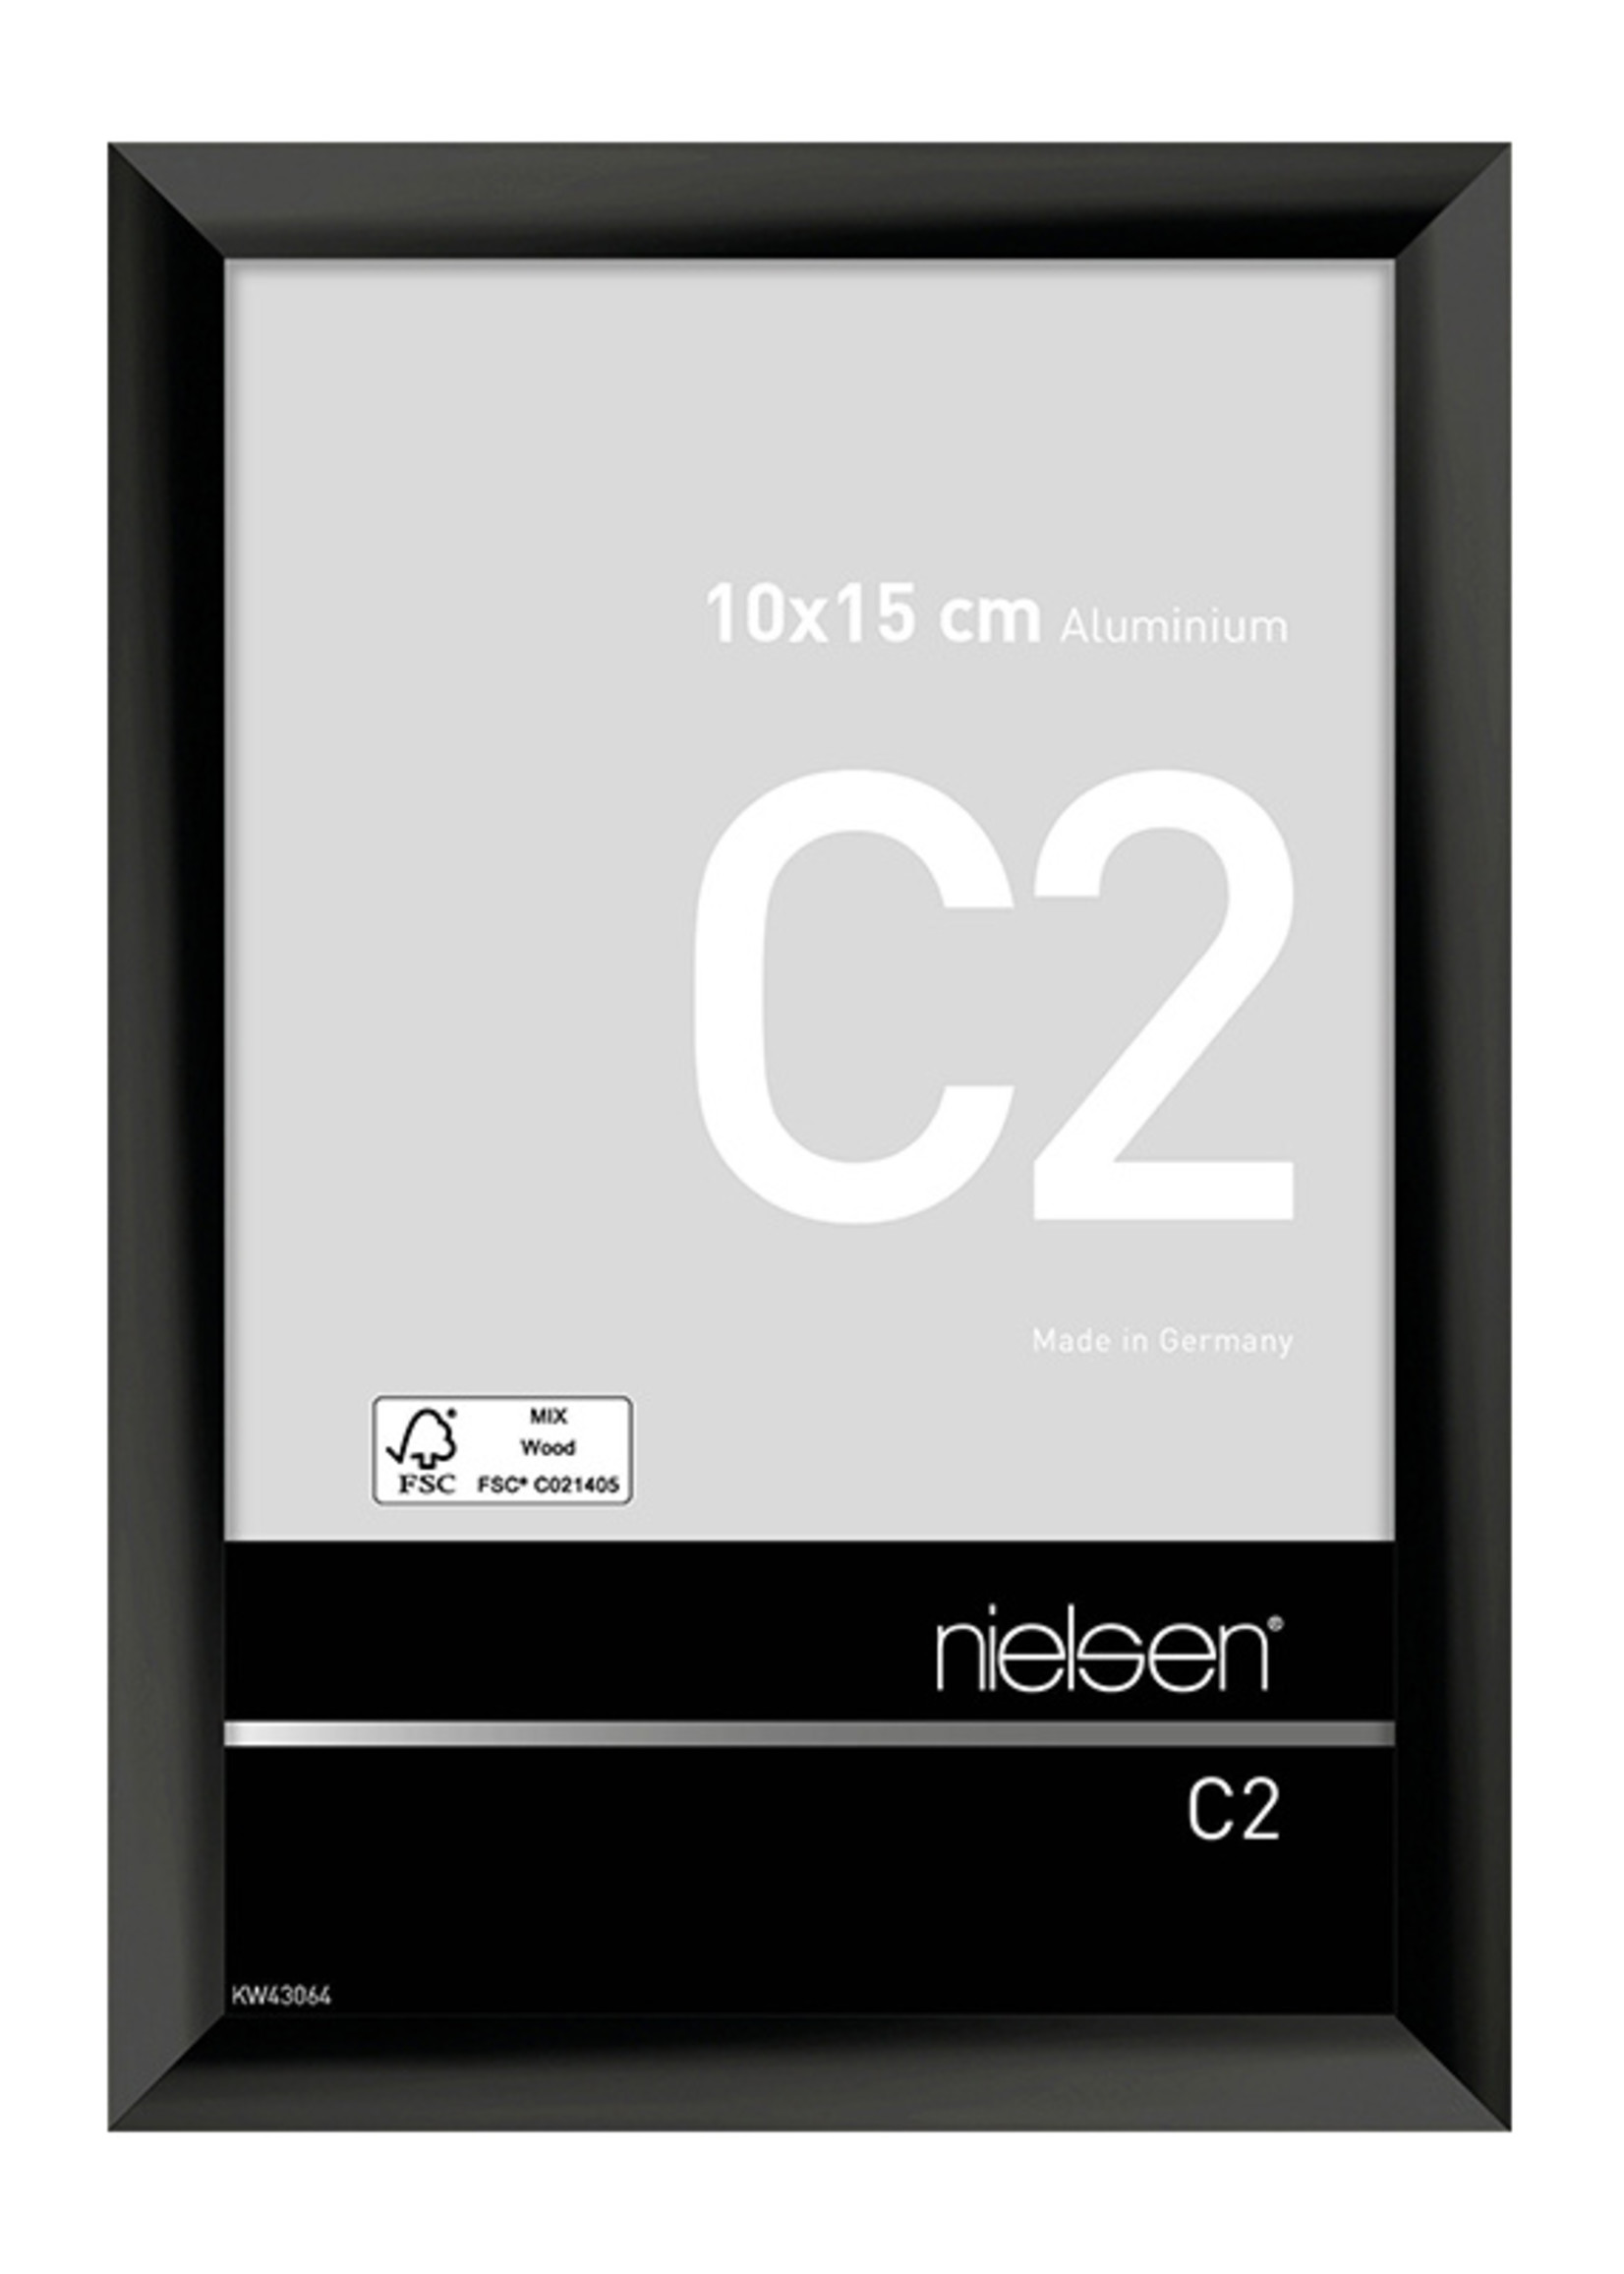 Nielsen C2 Hgl. Black